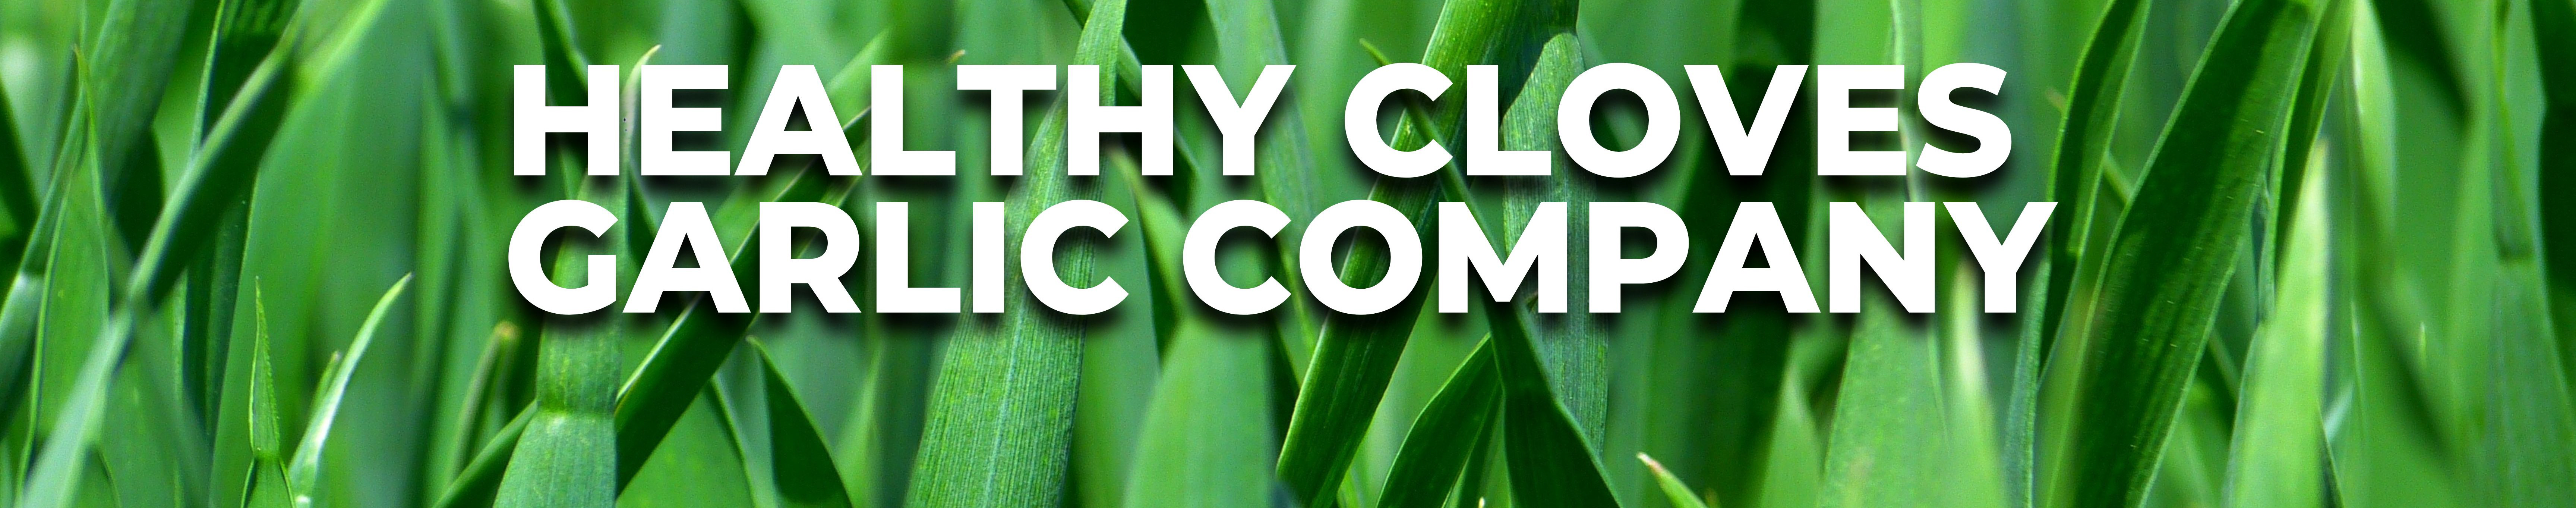 Healthy Cloves Garlic Company profil başlığı